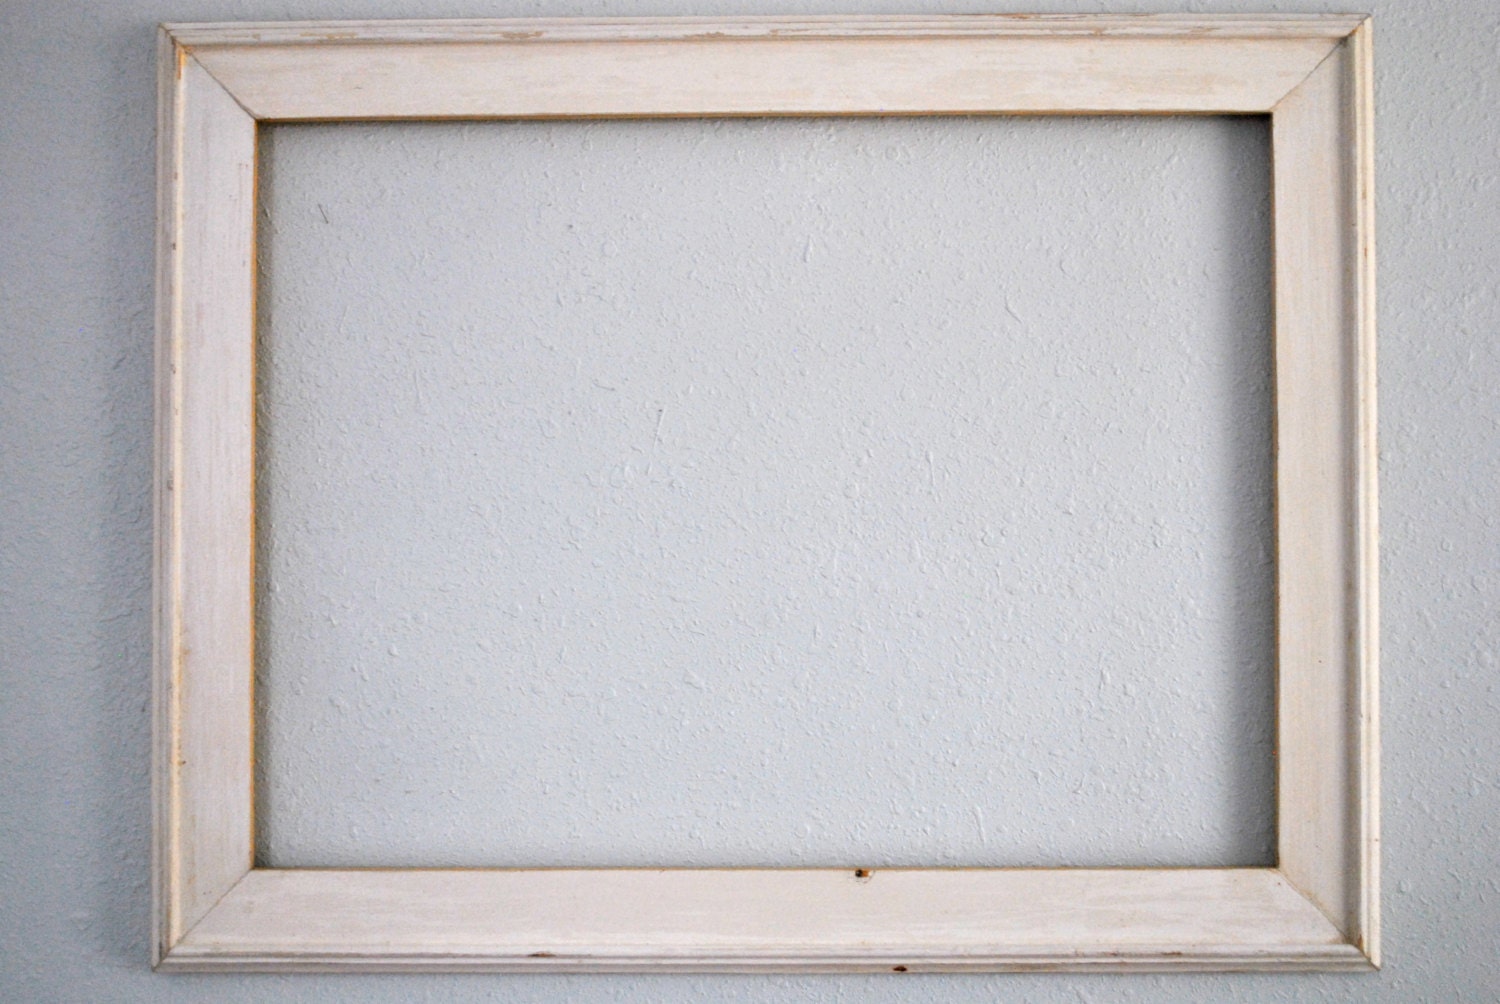 18 x 24 Creamy White Door Facing Frame by BeamsBoardsBarns on Etsy